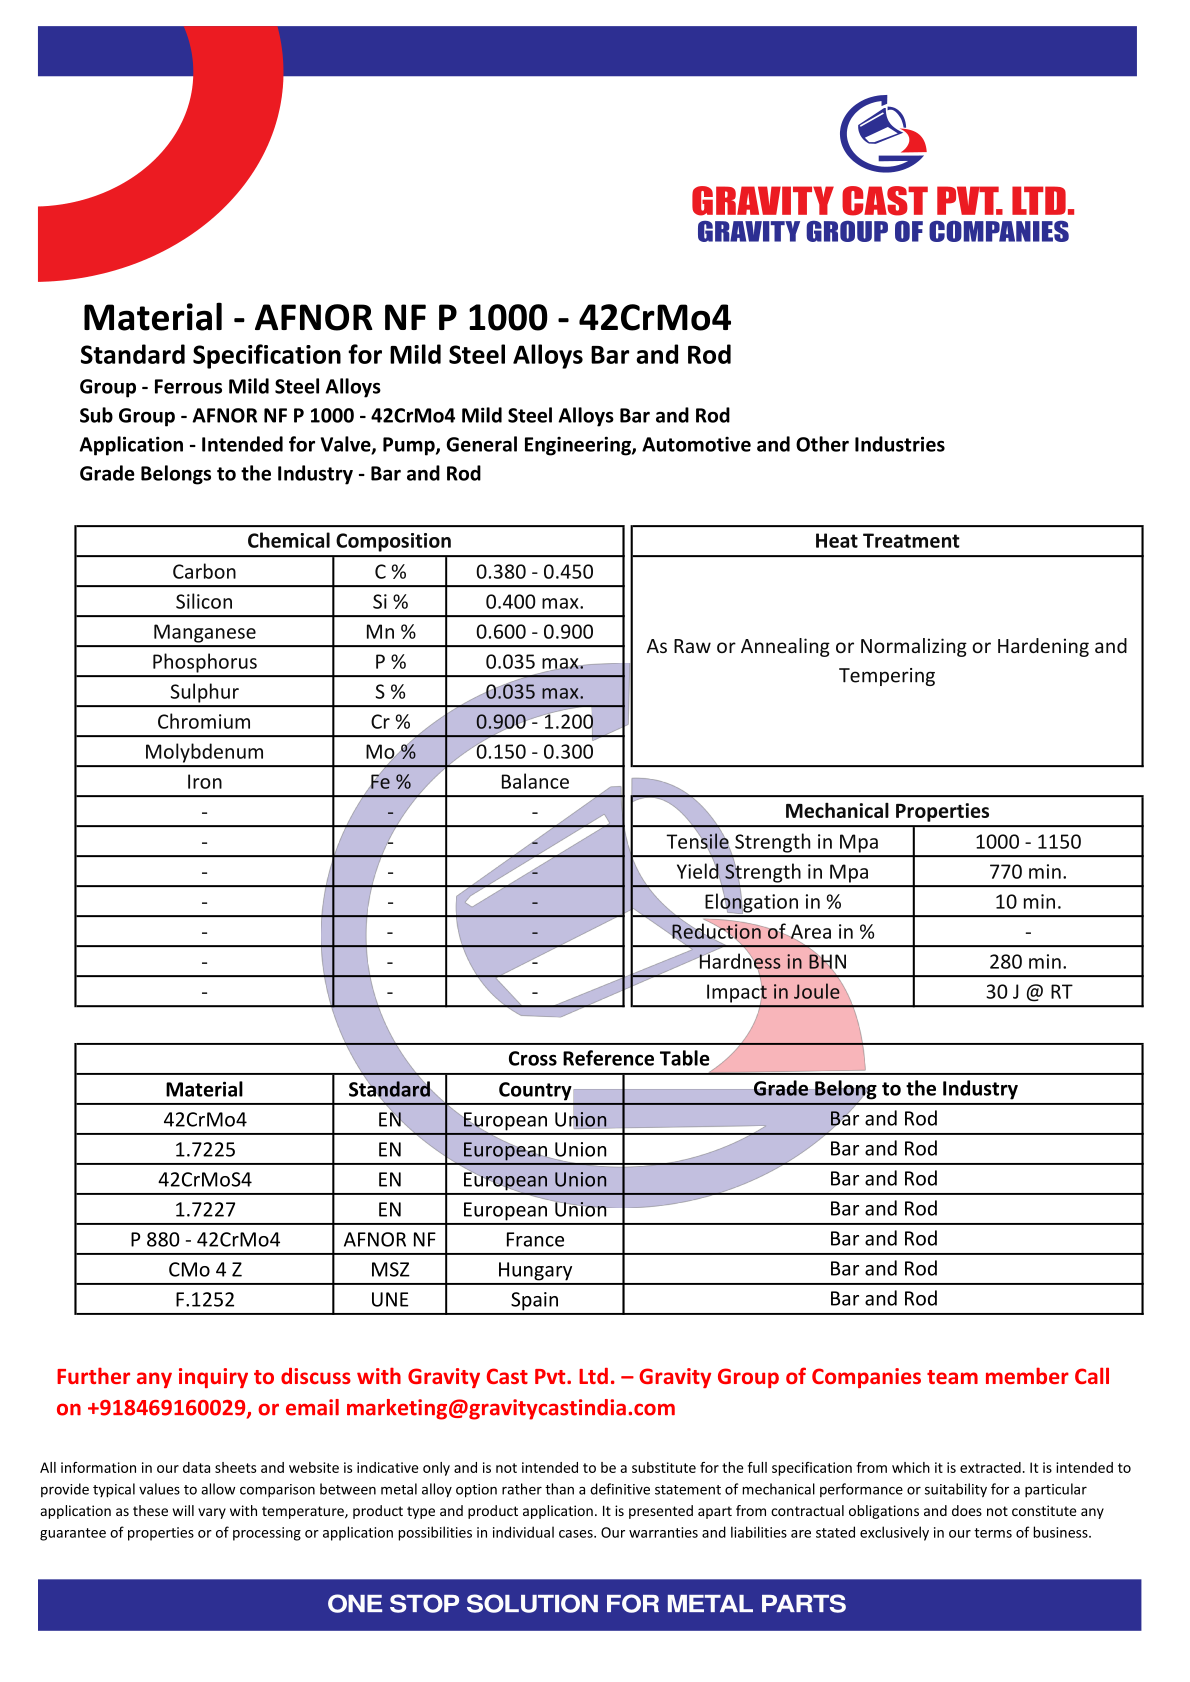 AFNOR NF P 1000 - 42CrMo4.pdf